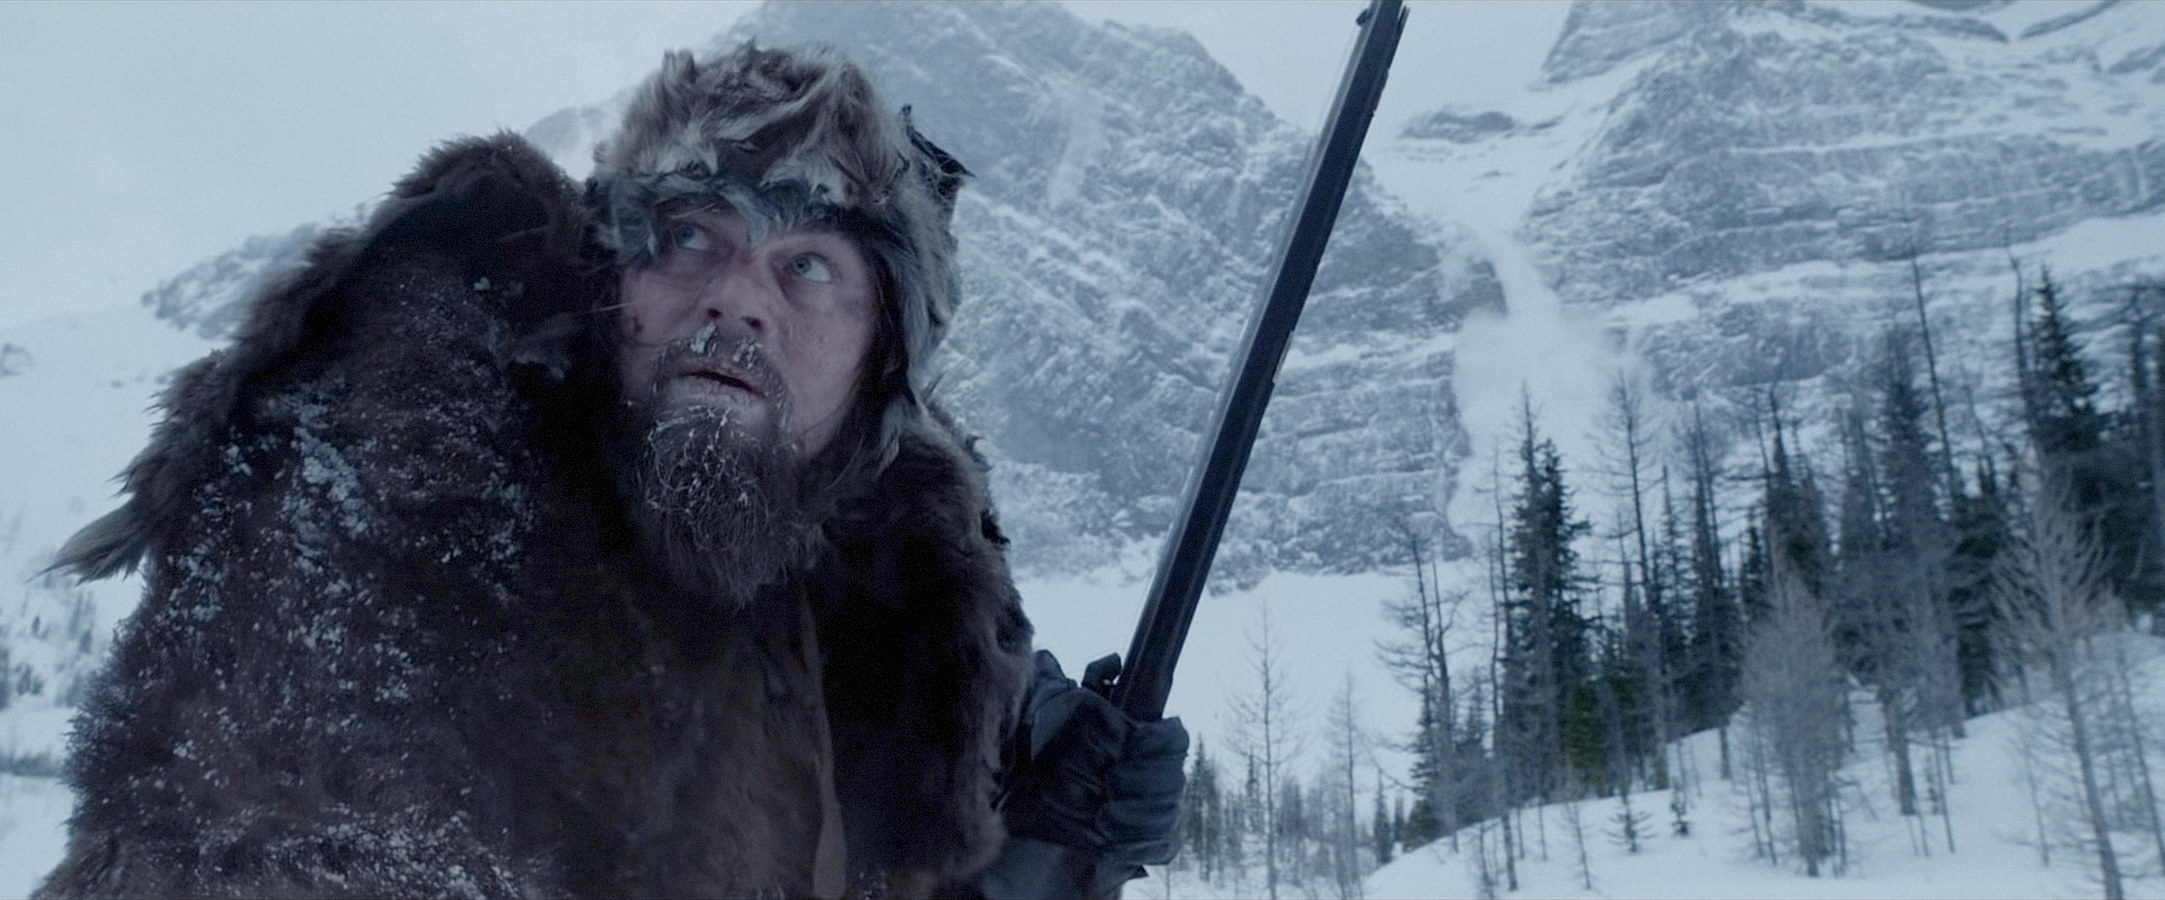 Leonardo DiCaprio wears fur in the snow